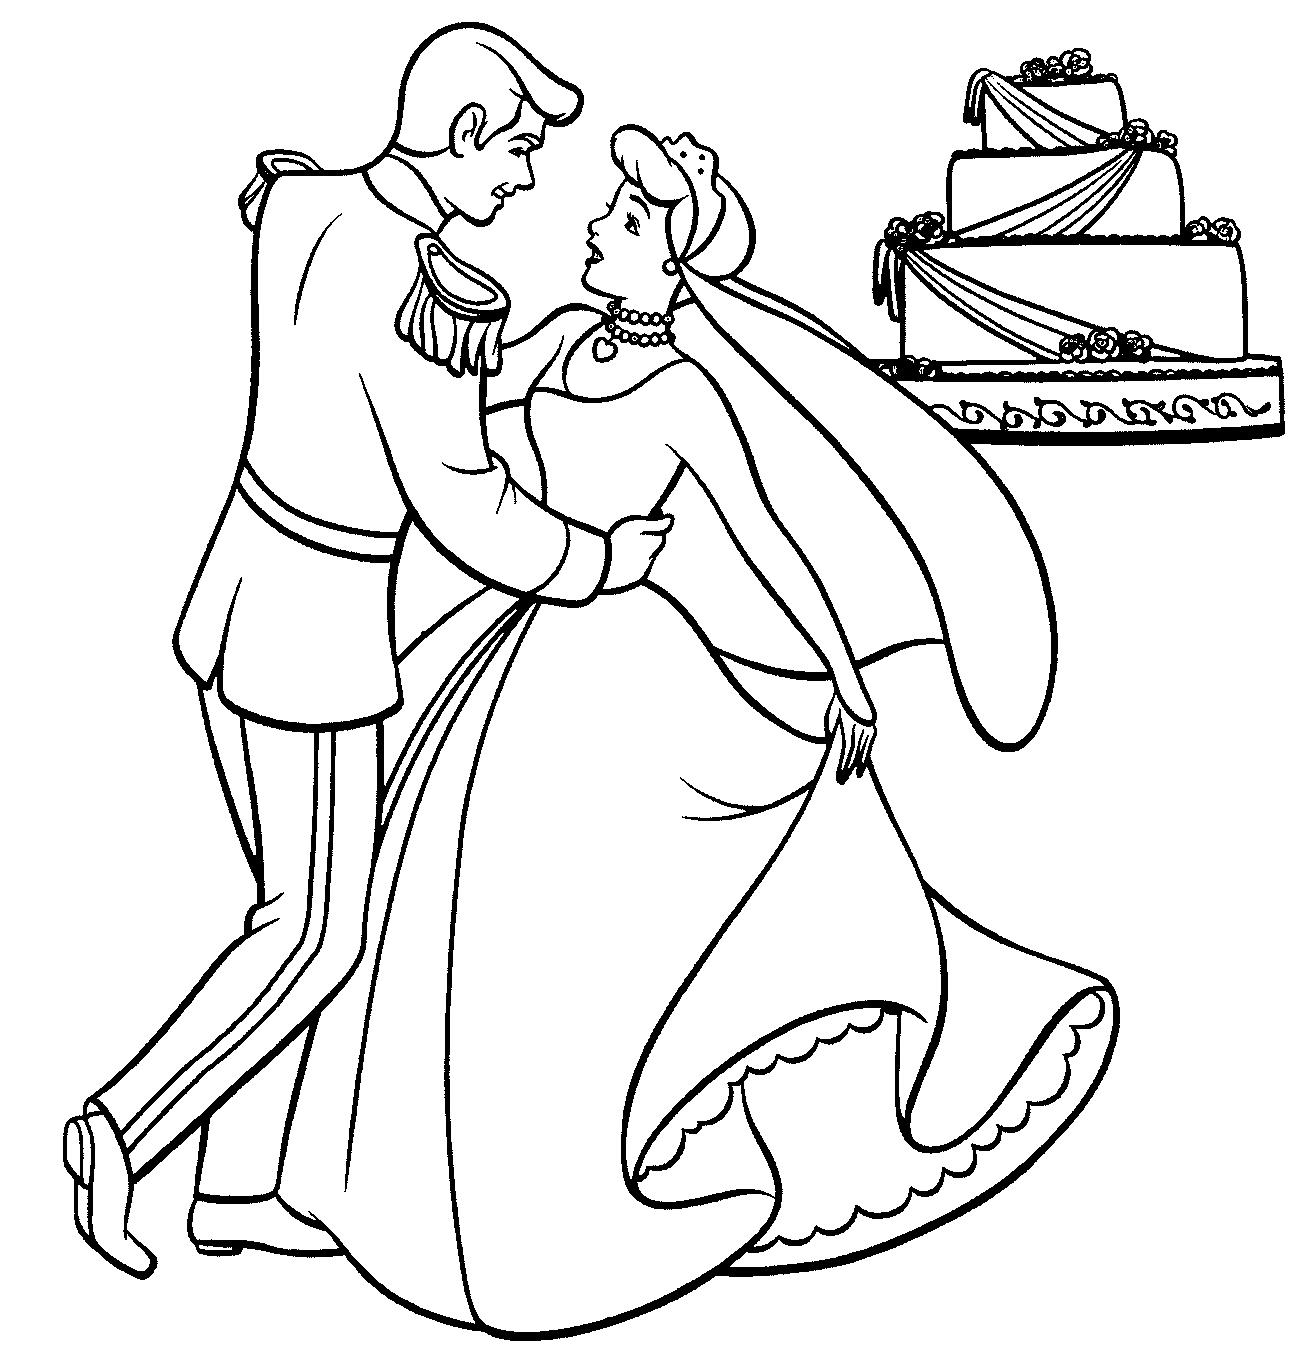 Cinderella & her Prince